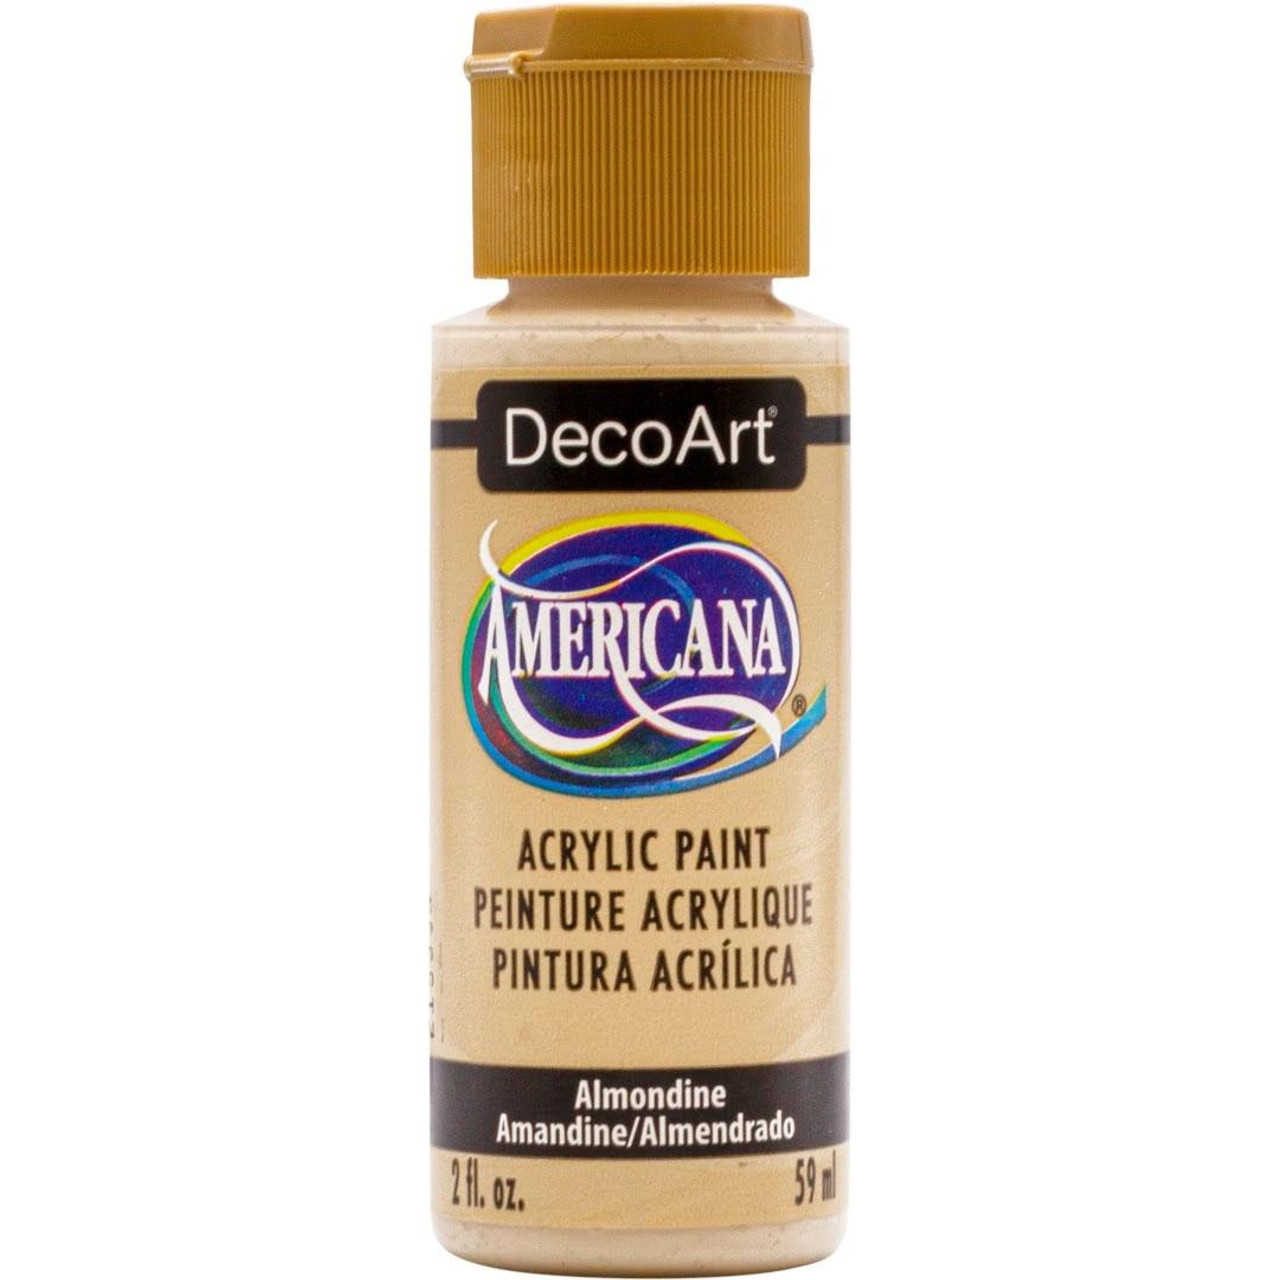 Deco Art Americana Almondine